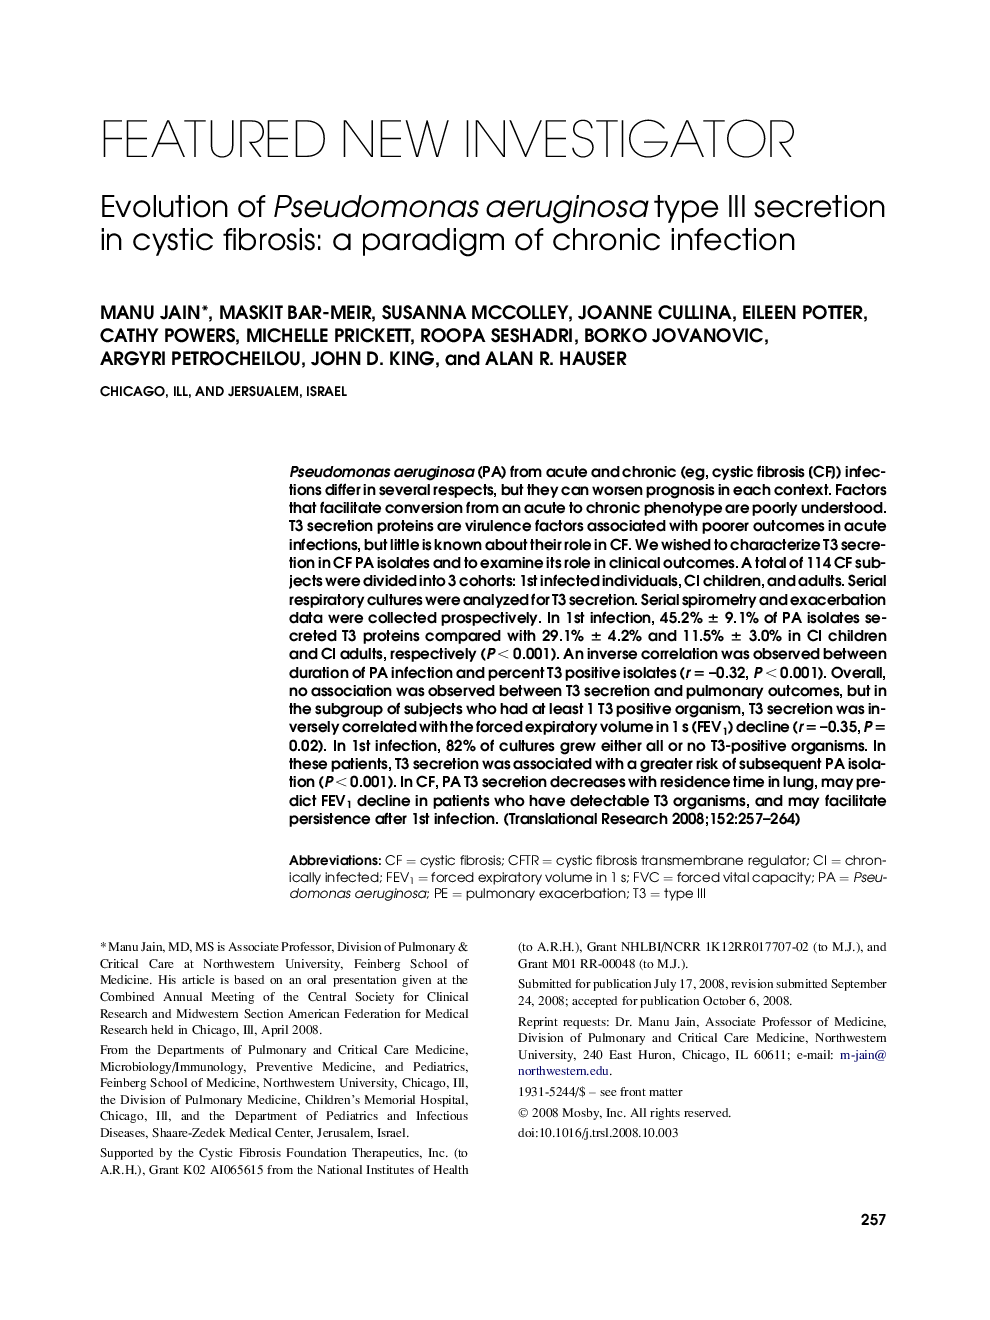 Evolution of Pseudomonas aeruginosa type III secretion in cystic fibrosis: a paradigm of chronic infection 